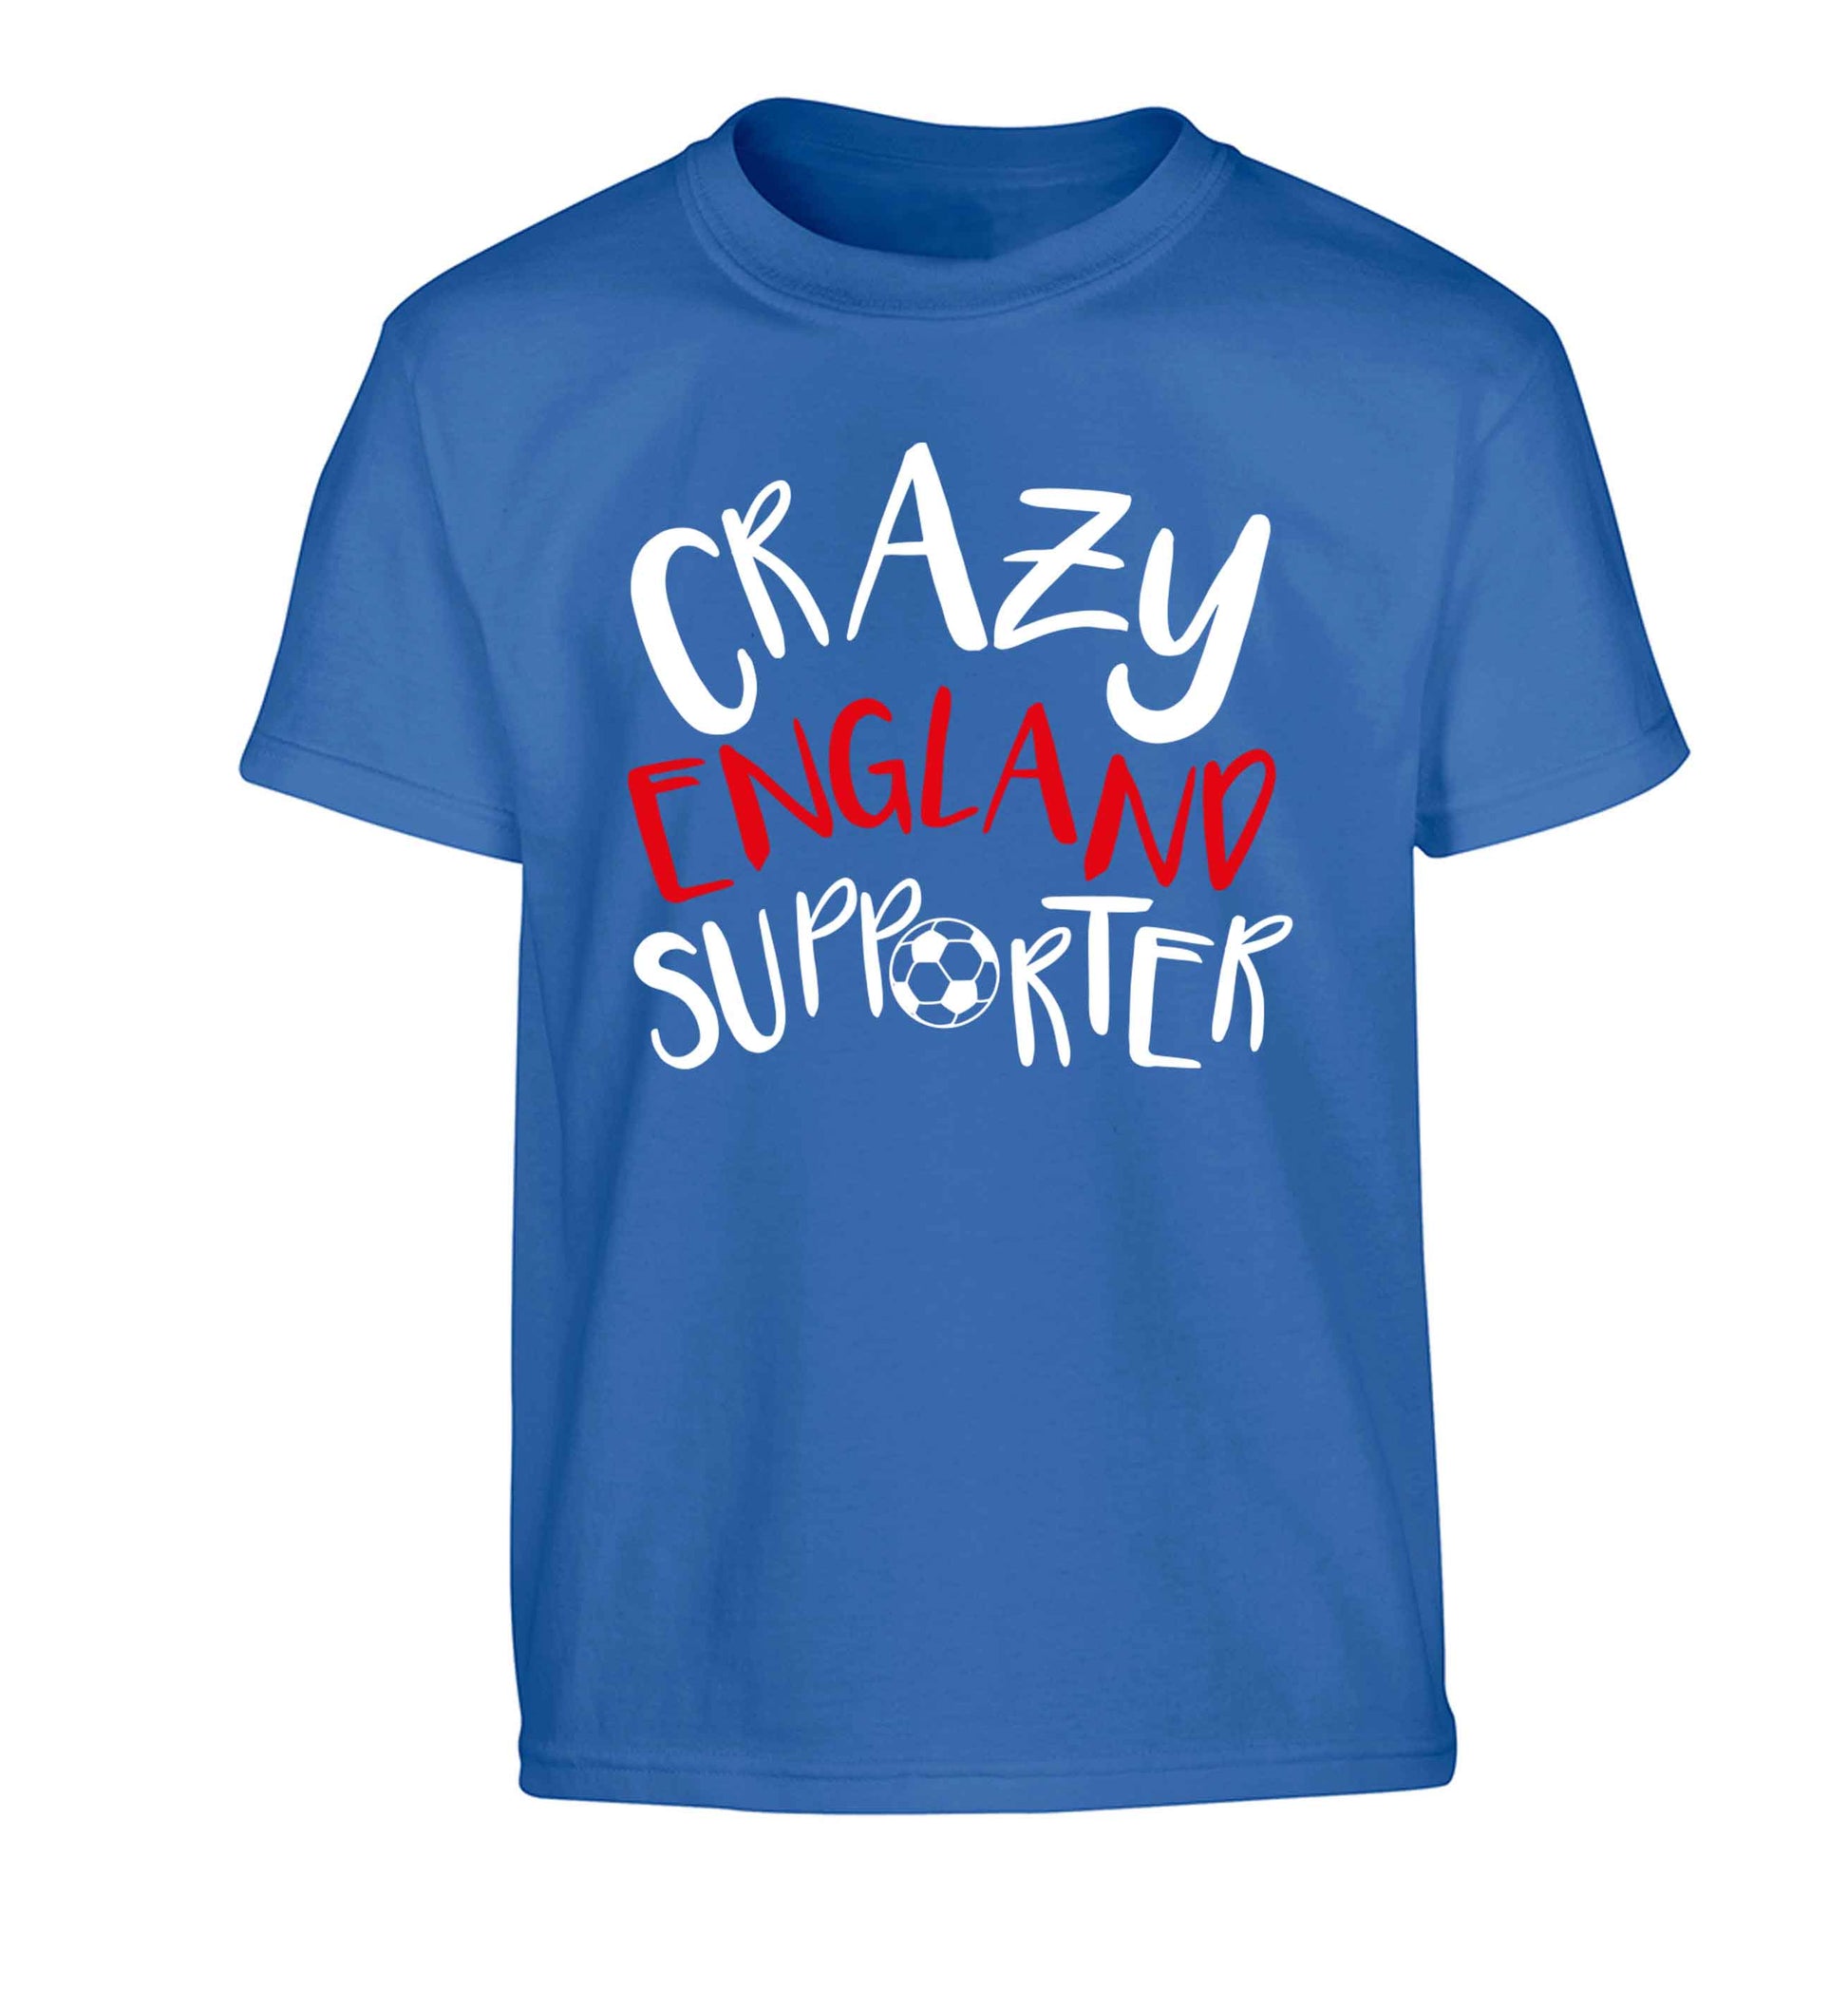 Crazy England supporter Children's blue Tshirt 12-13 Years